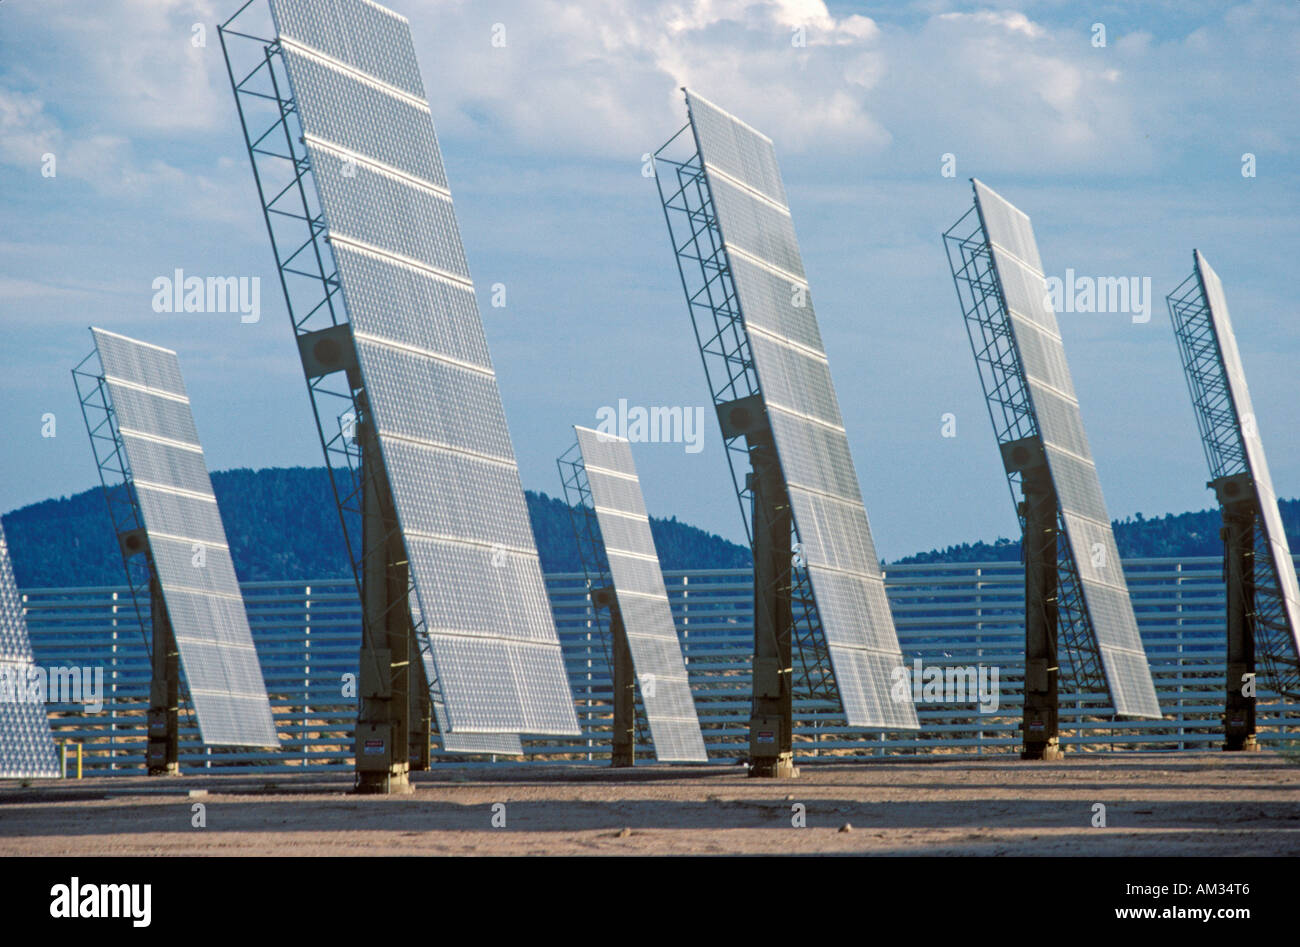 ARCO photovoltaic solar panels in Hesperia CA Stock Photo